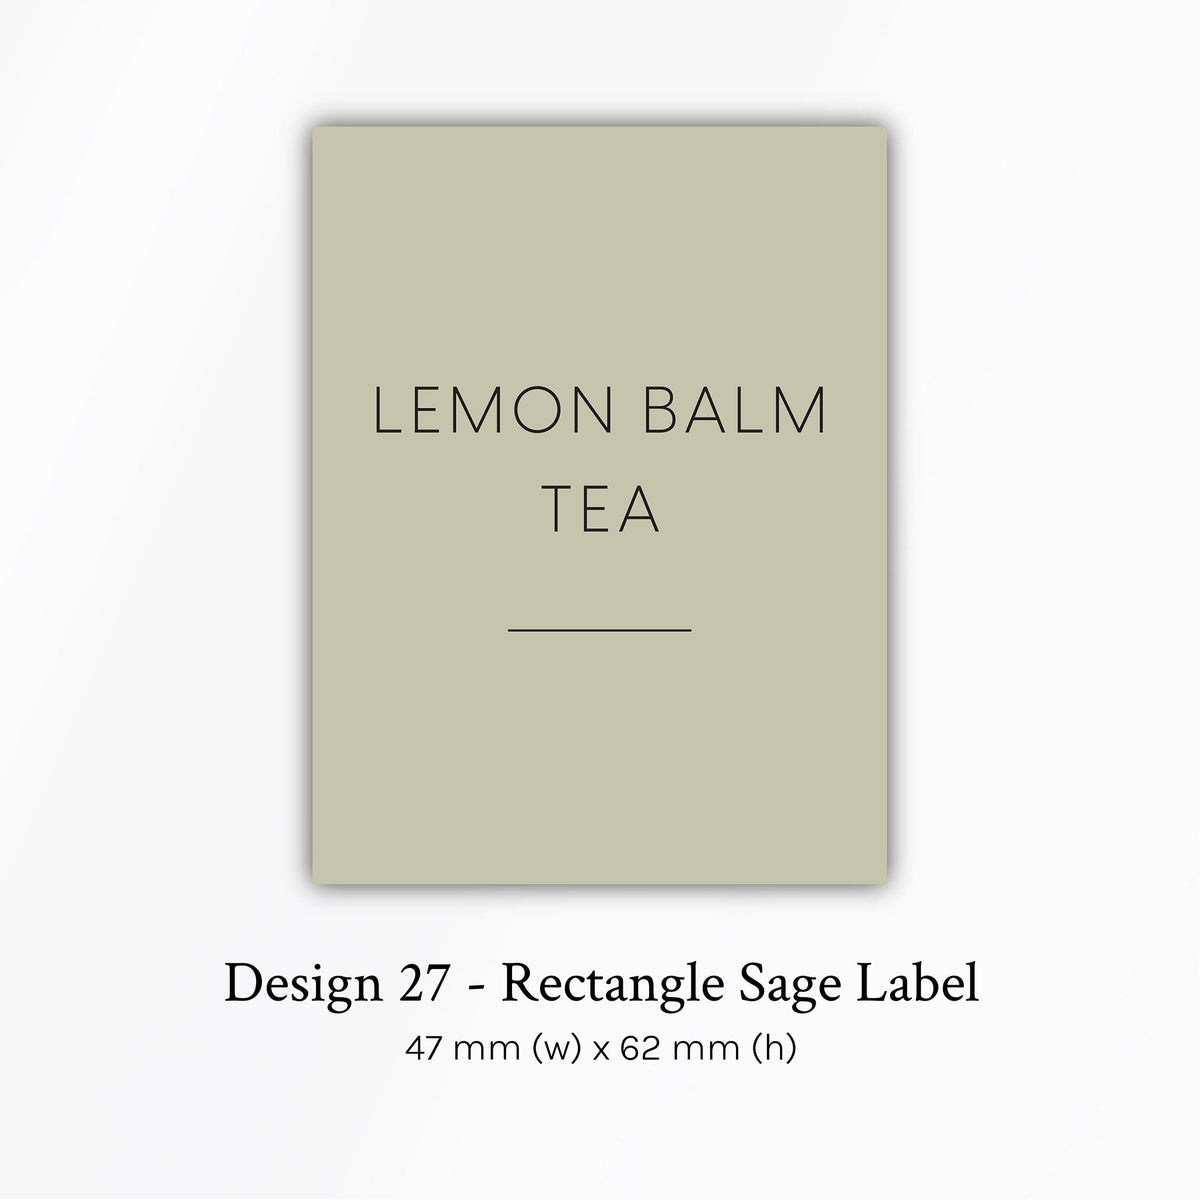 Custom Pantry Labels (Design 26 - Design 30)